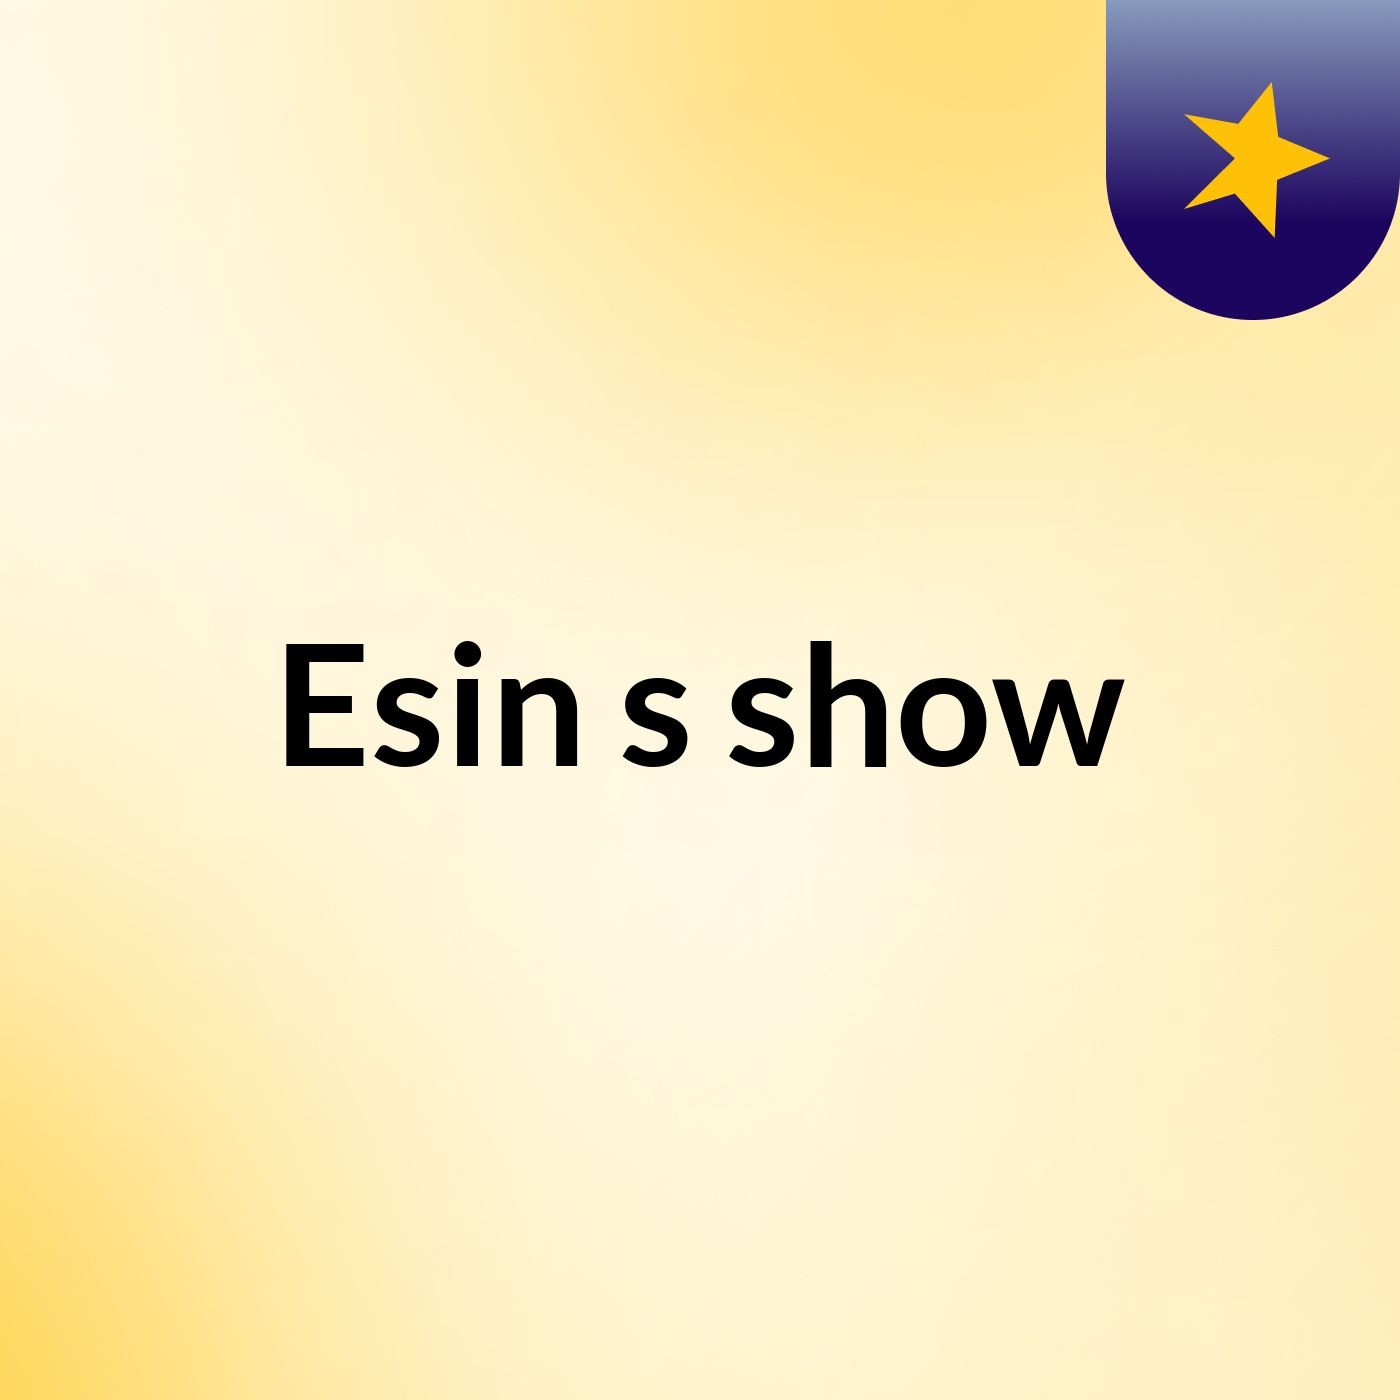 Esin's show